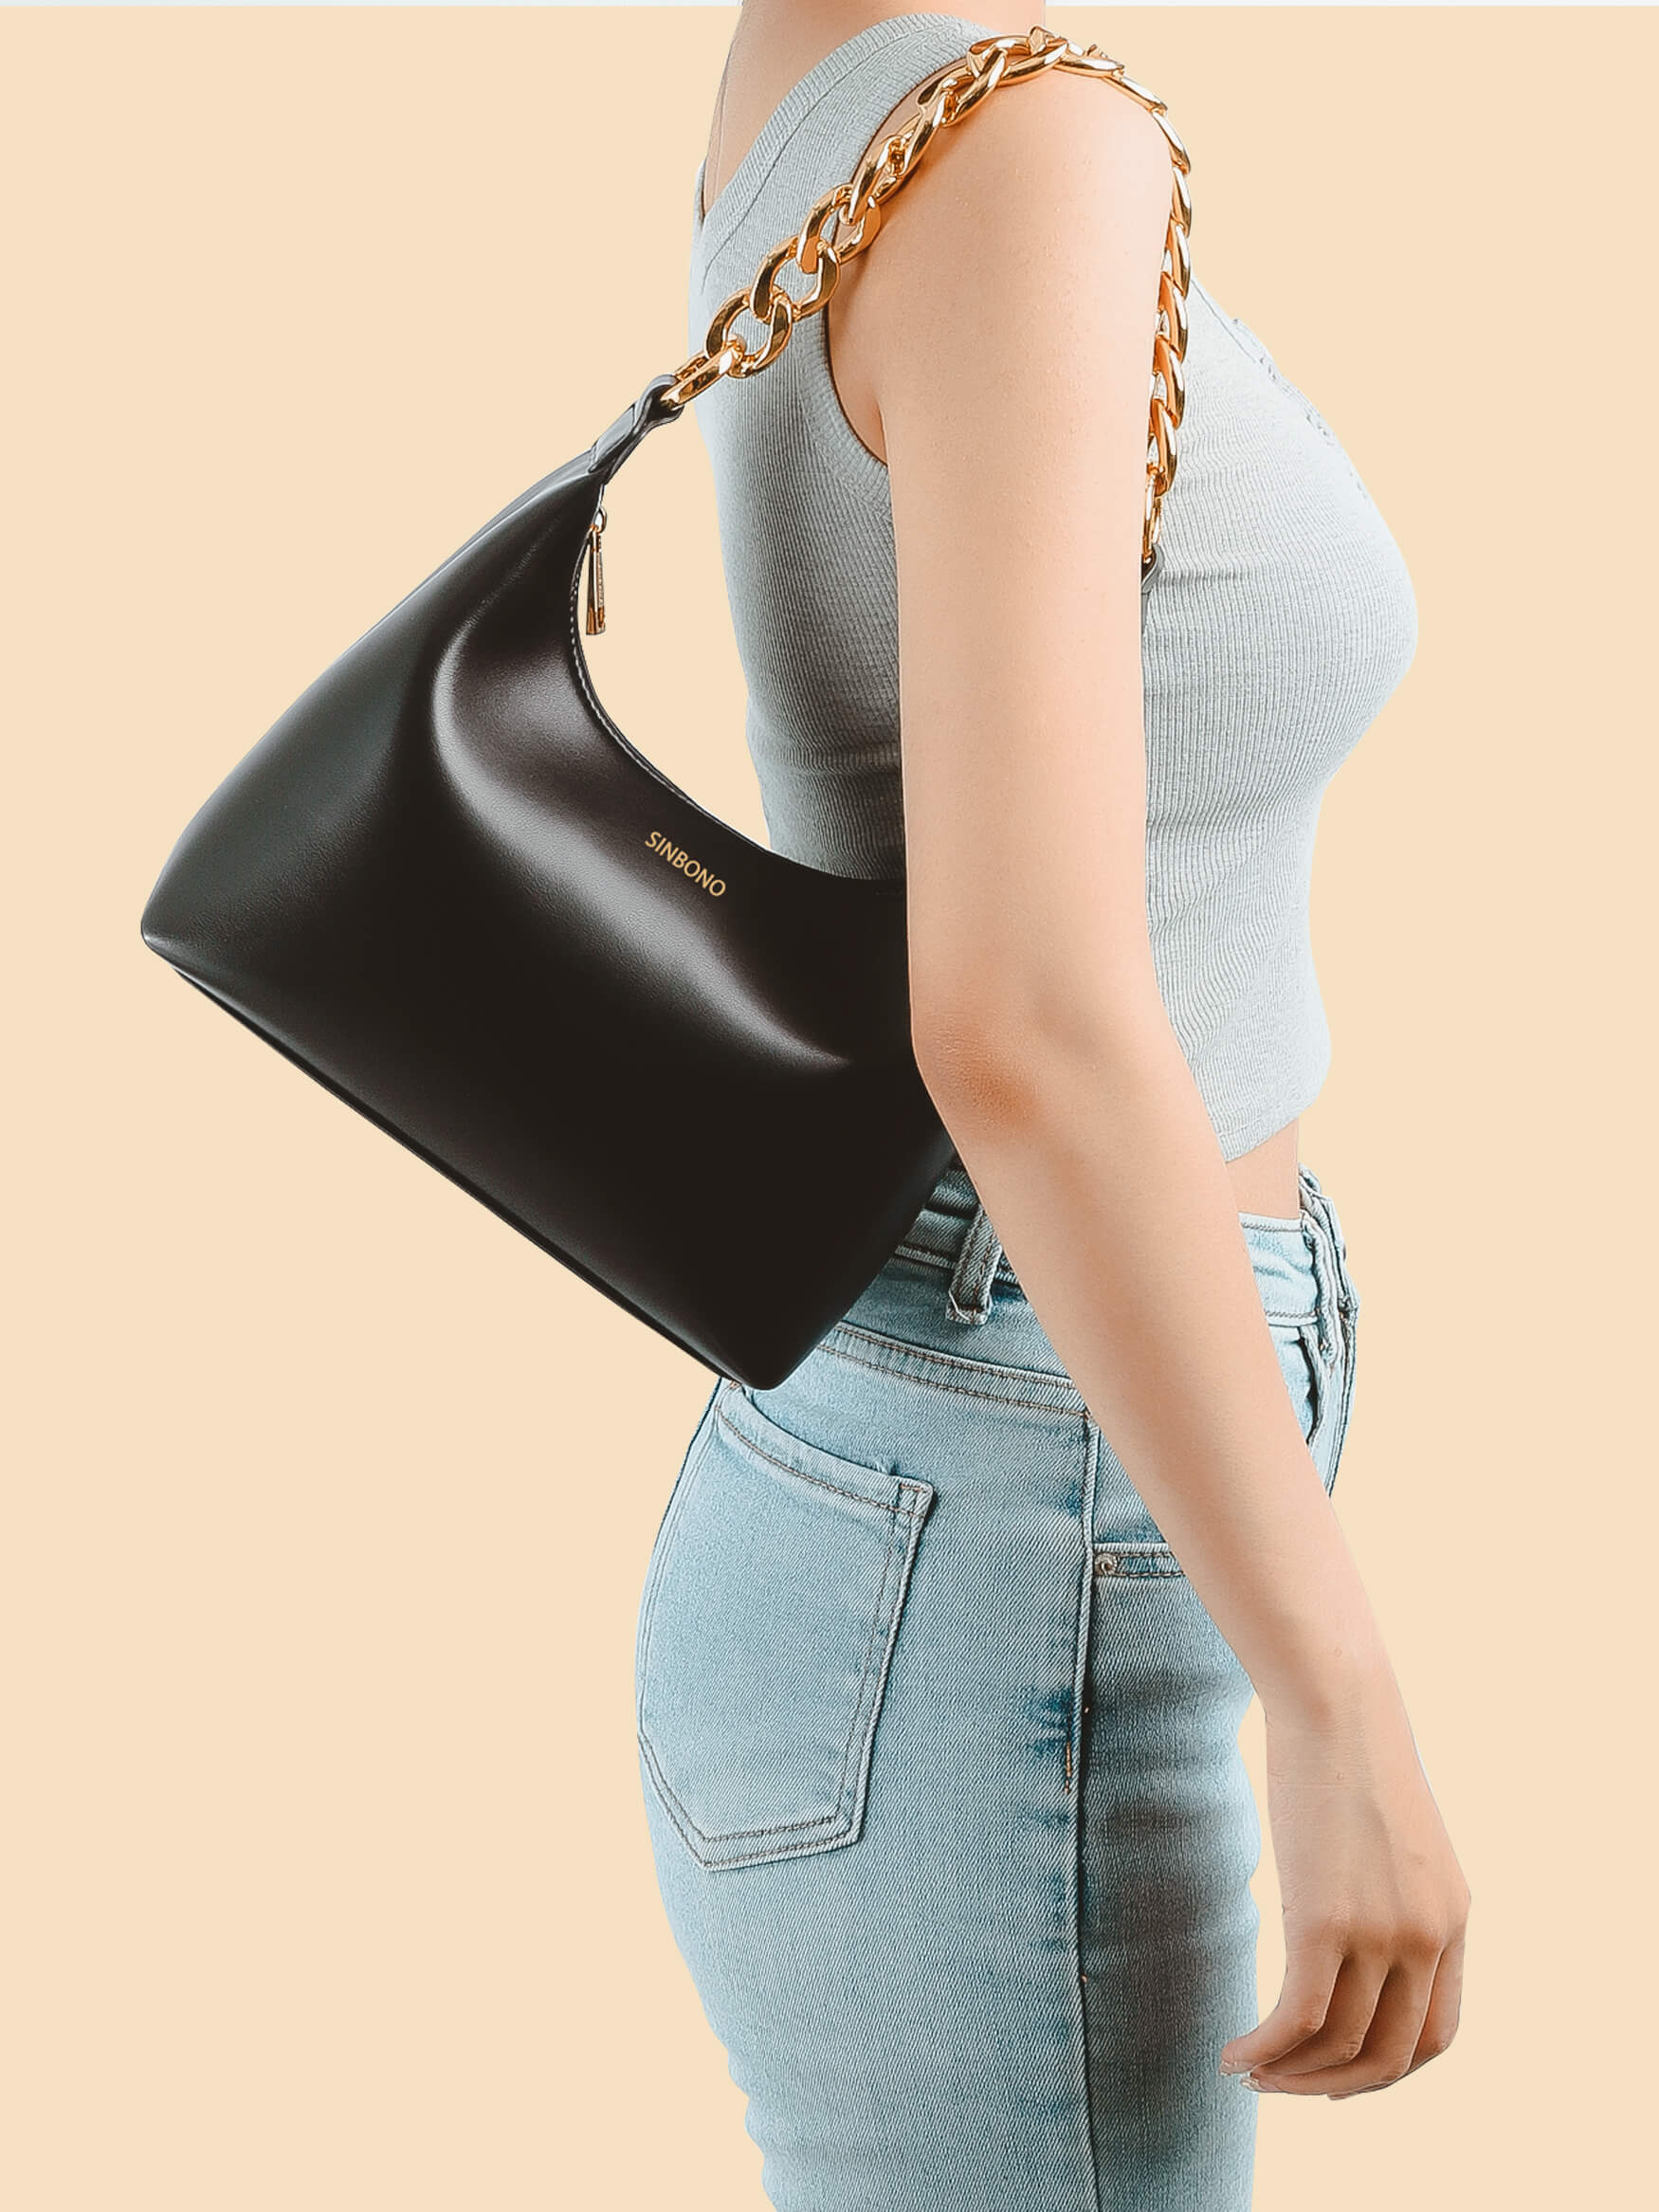 SINBONO Black Shoulder Satchel Crossbody Women's Handbags